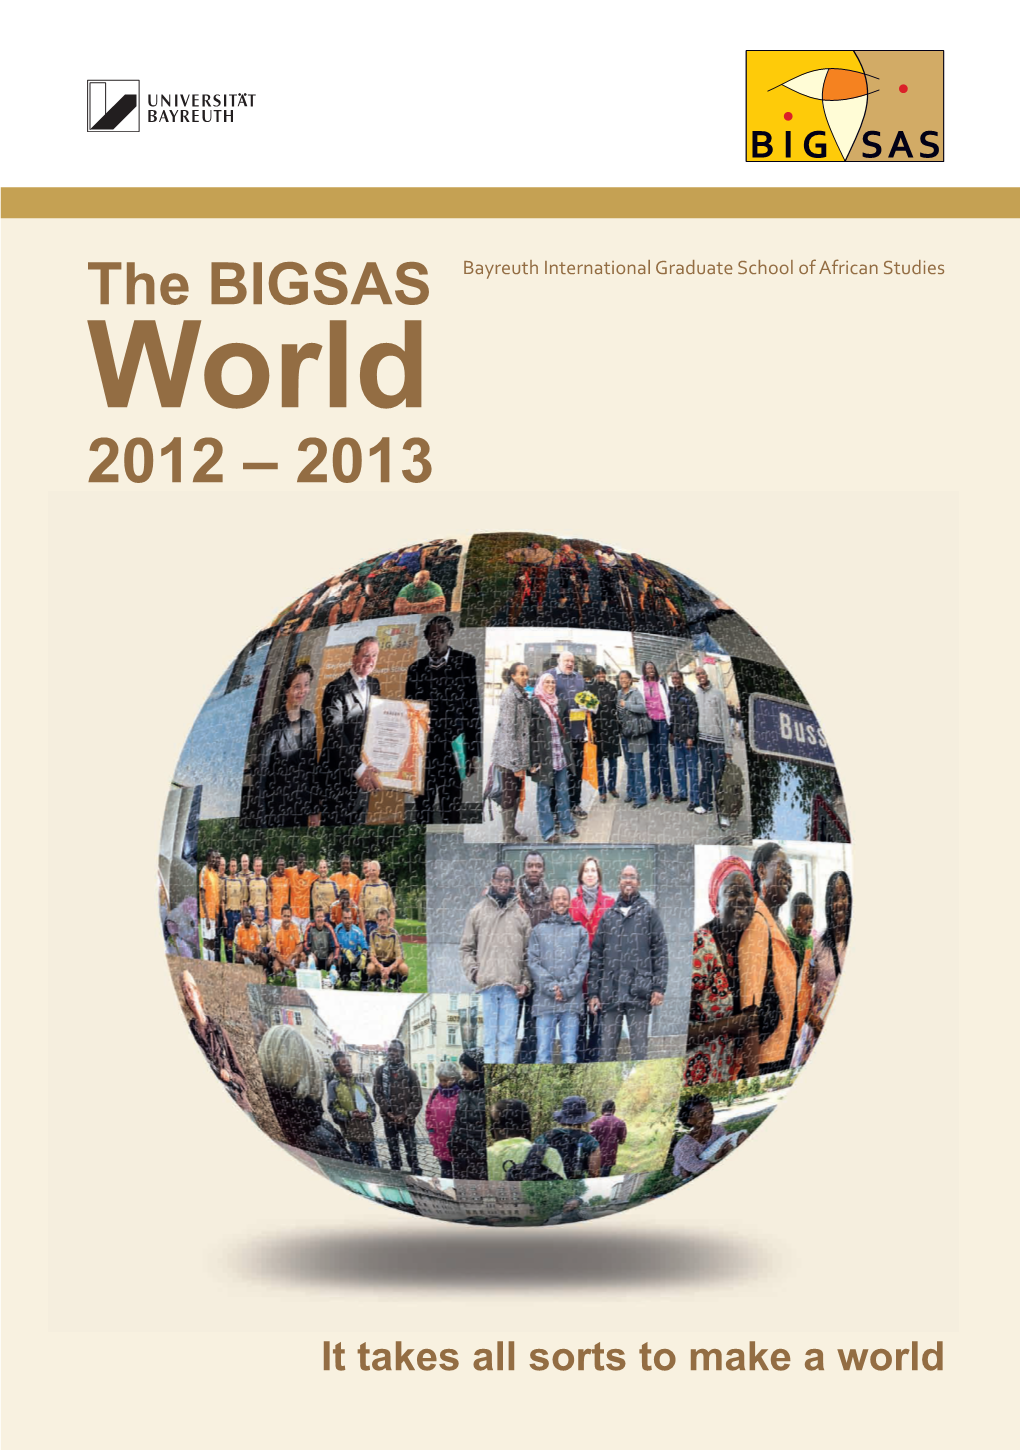 The BIGSAS Bayreuth International Graduate School of African Studies World 2012 – 2013